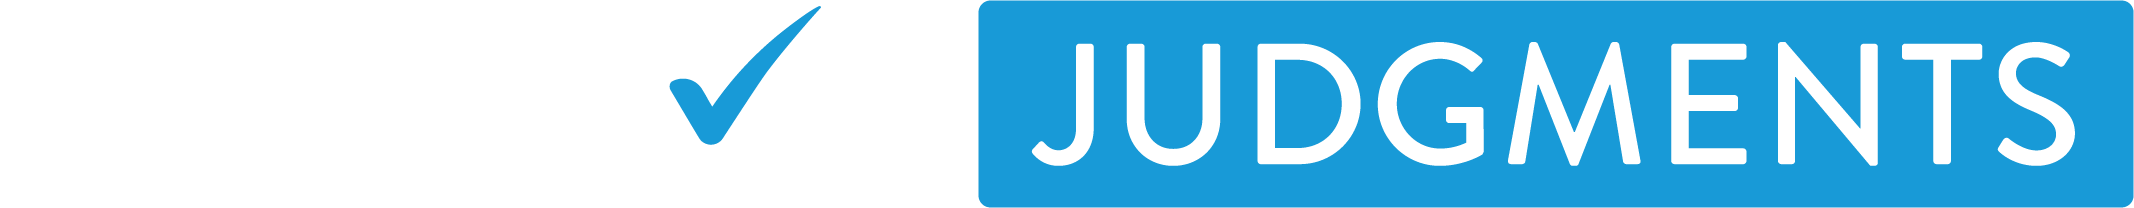 Election Judgement Logo